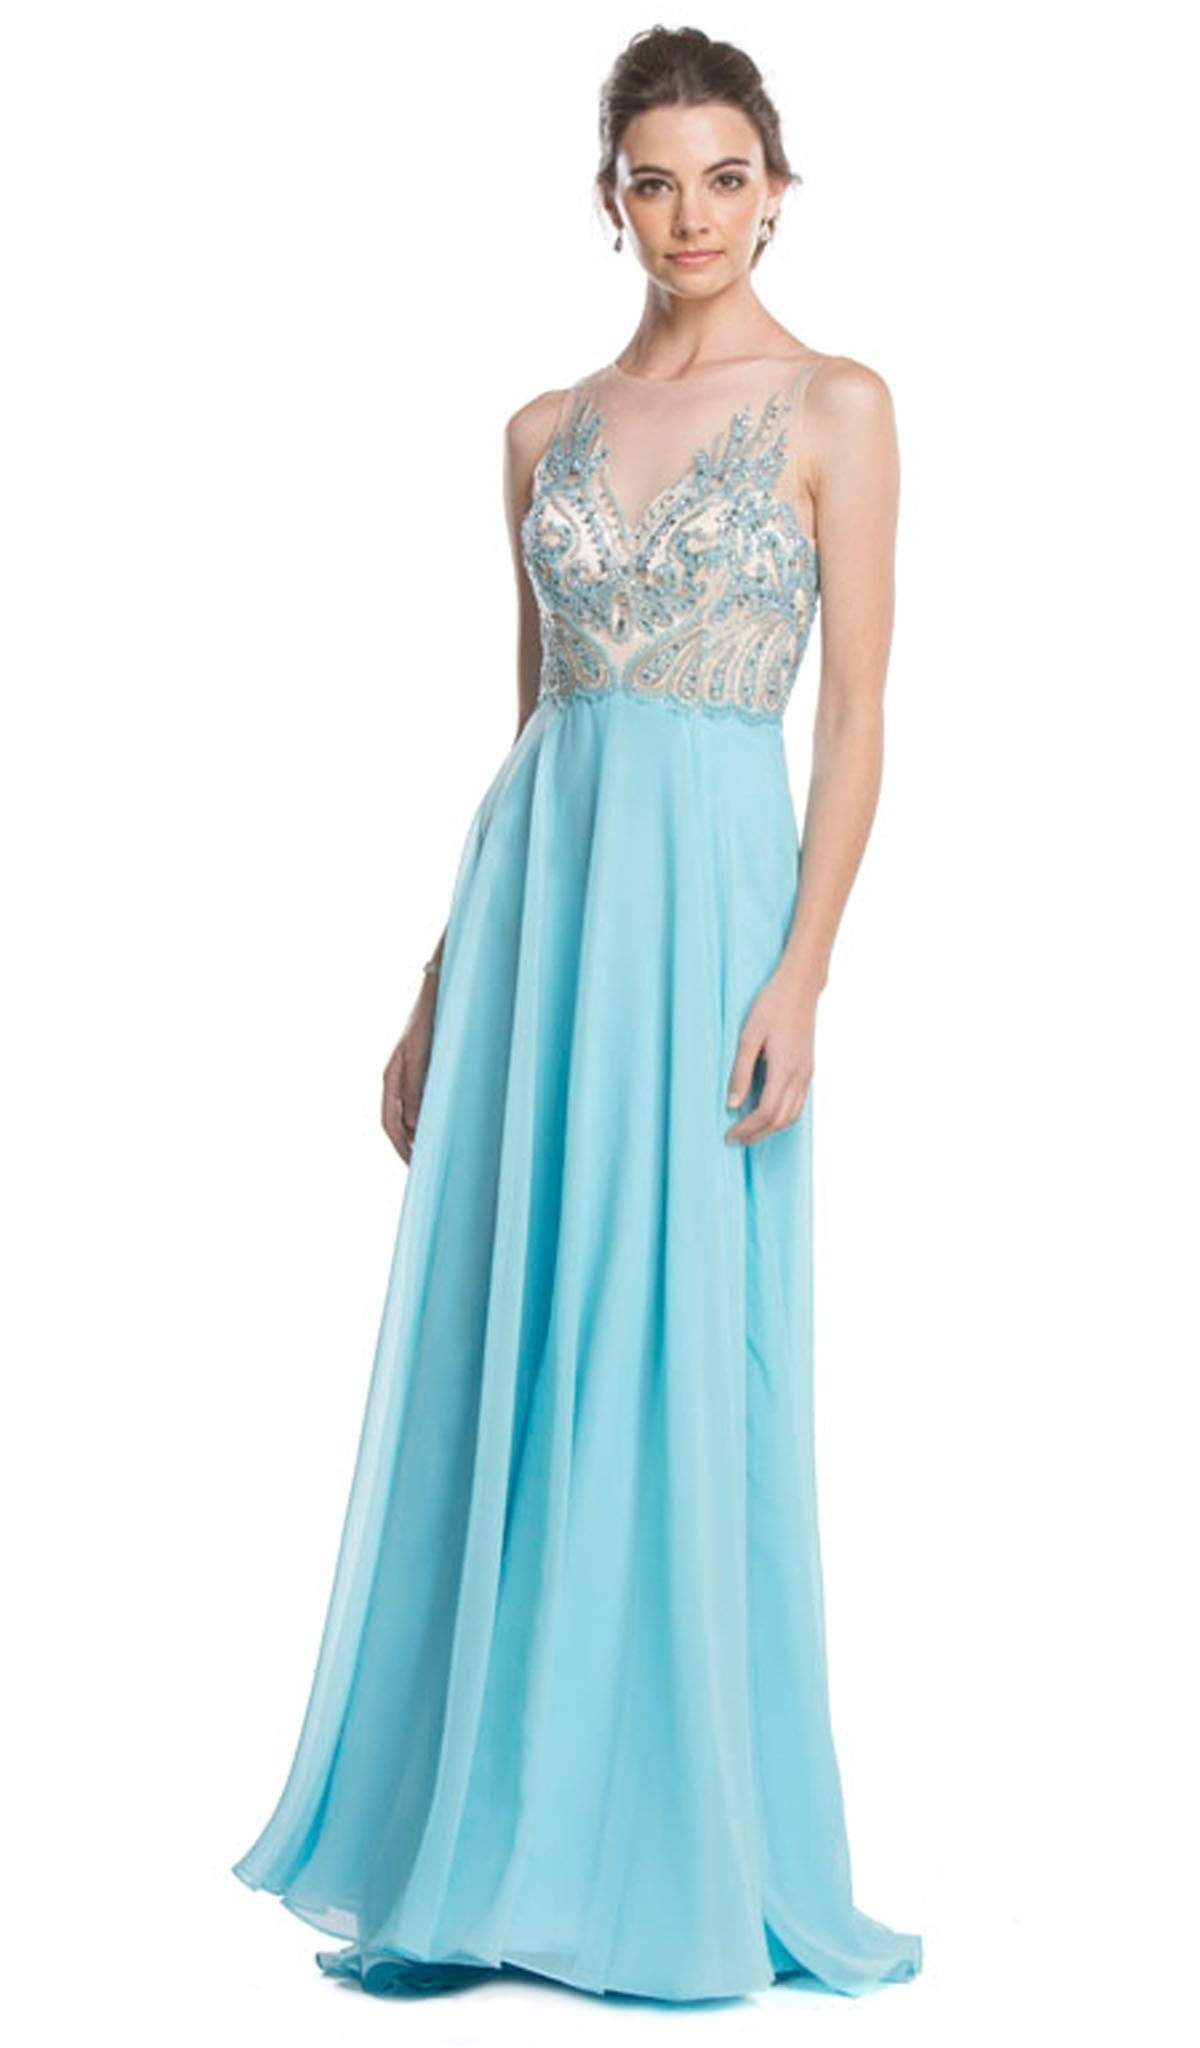 Aspeed Design - Embellished Illusion Neck A-line Prom Dress
